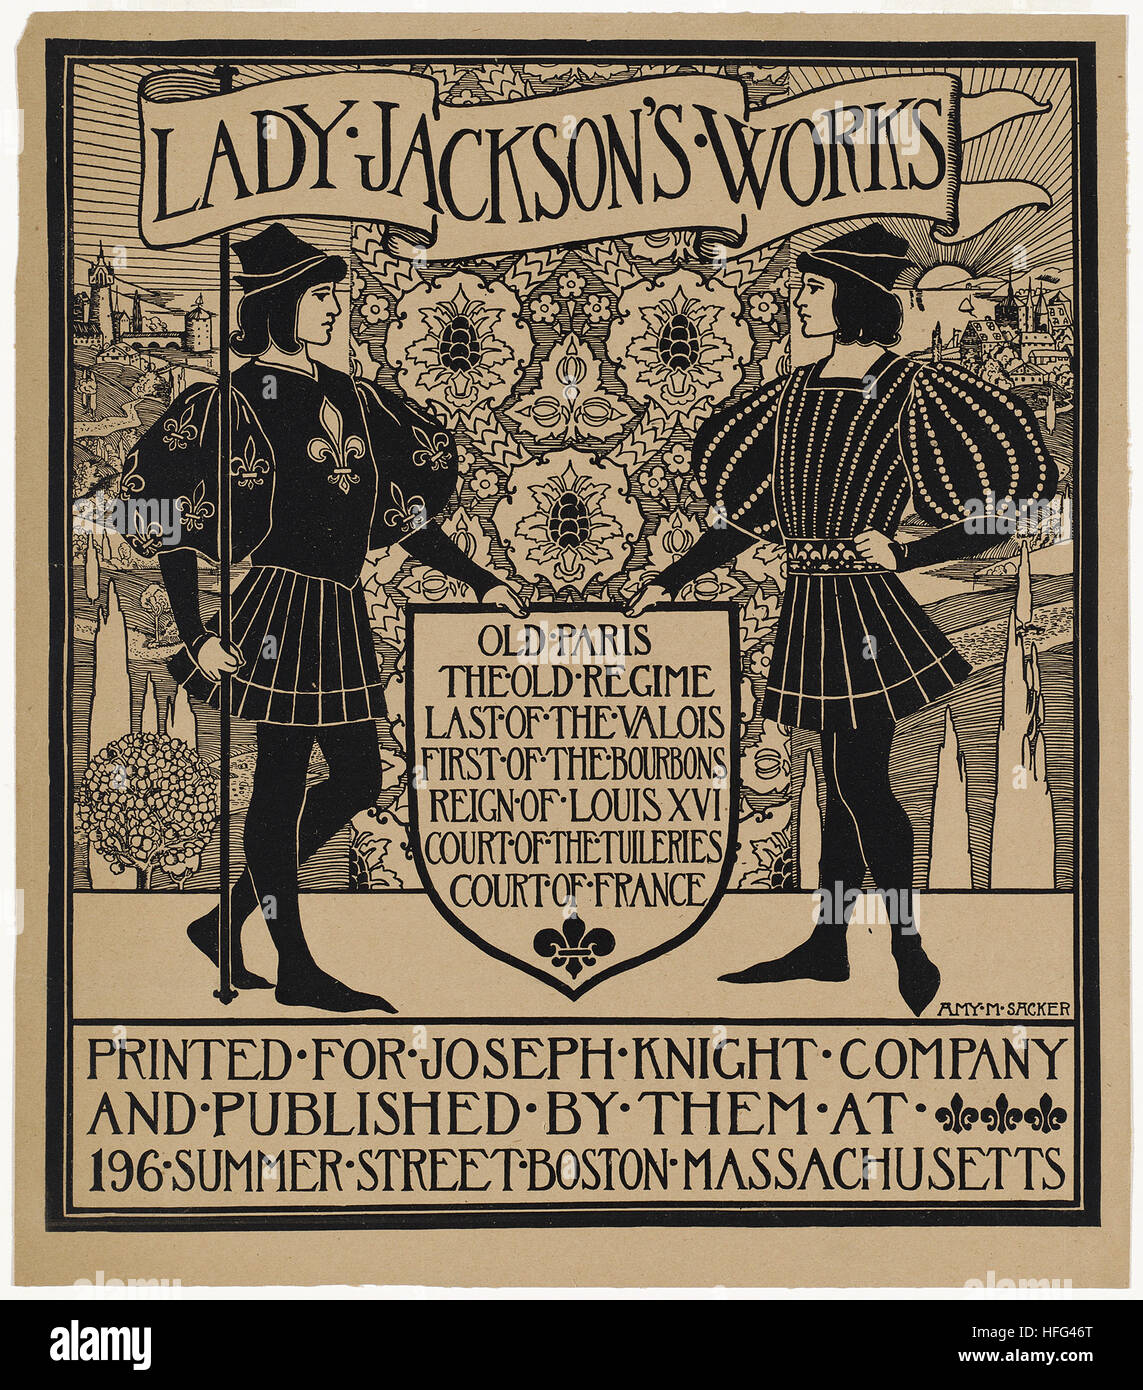 Lady Jackson's works Banque D'Images